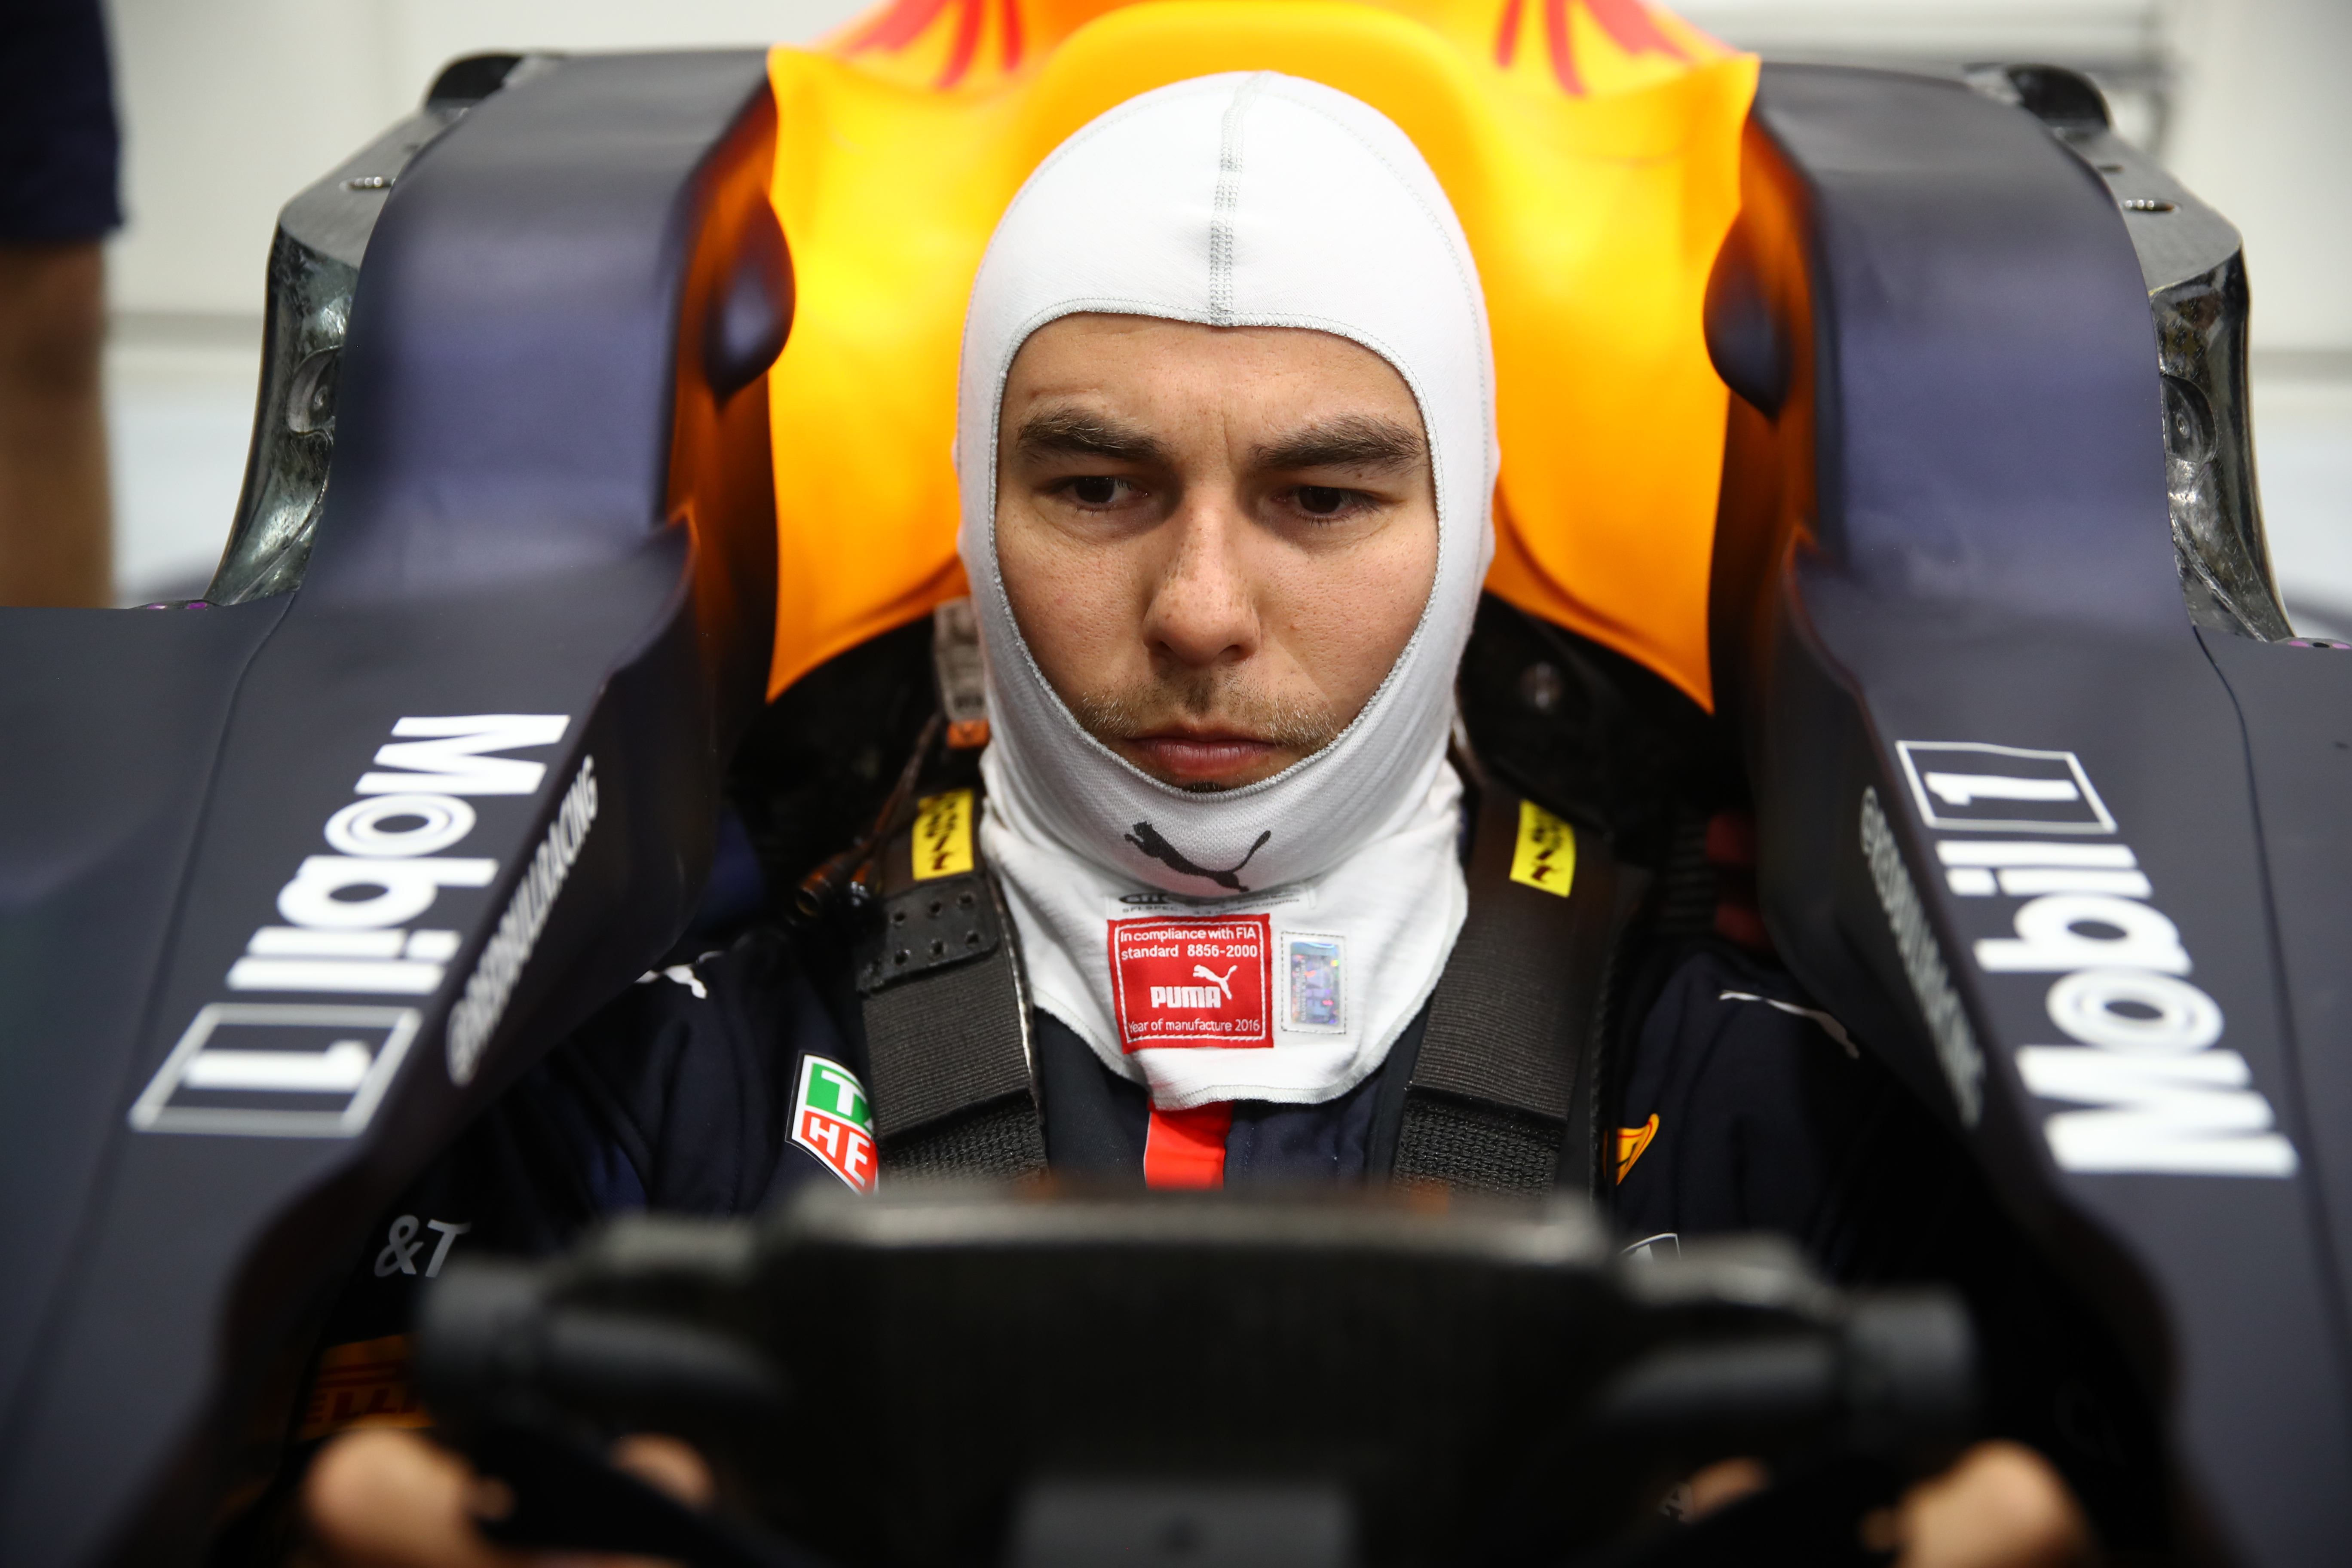 Sergio Perez Visits Red Bull Racing Factory